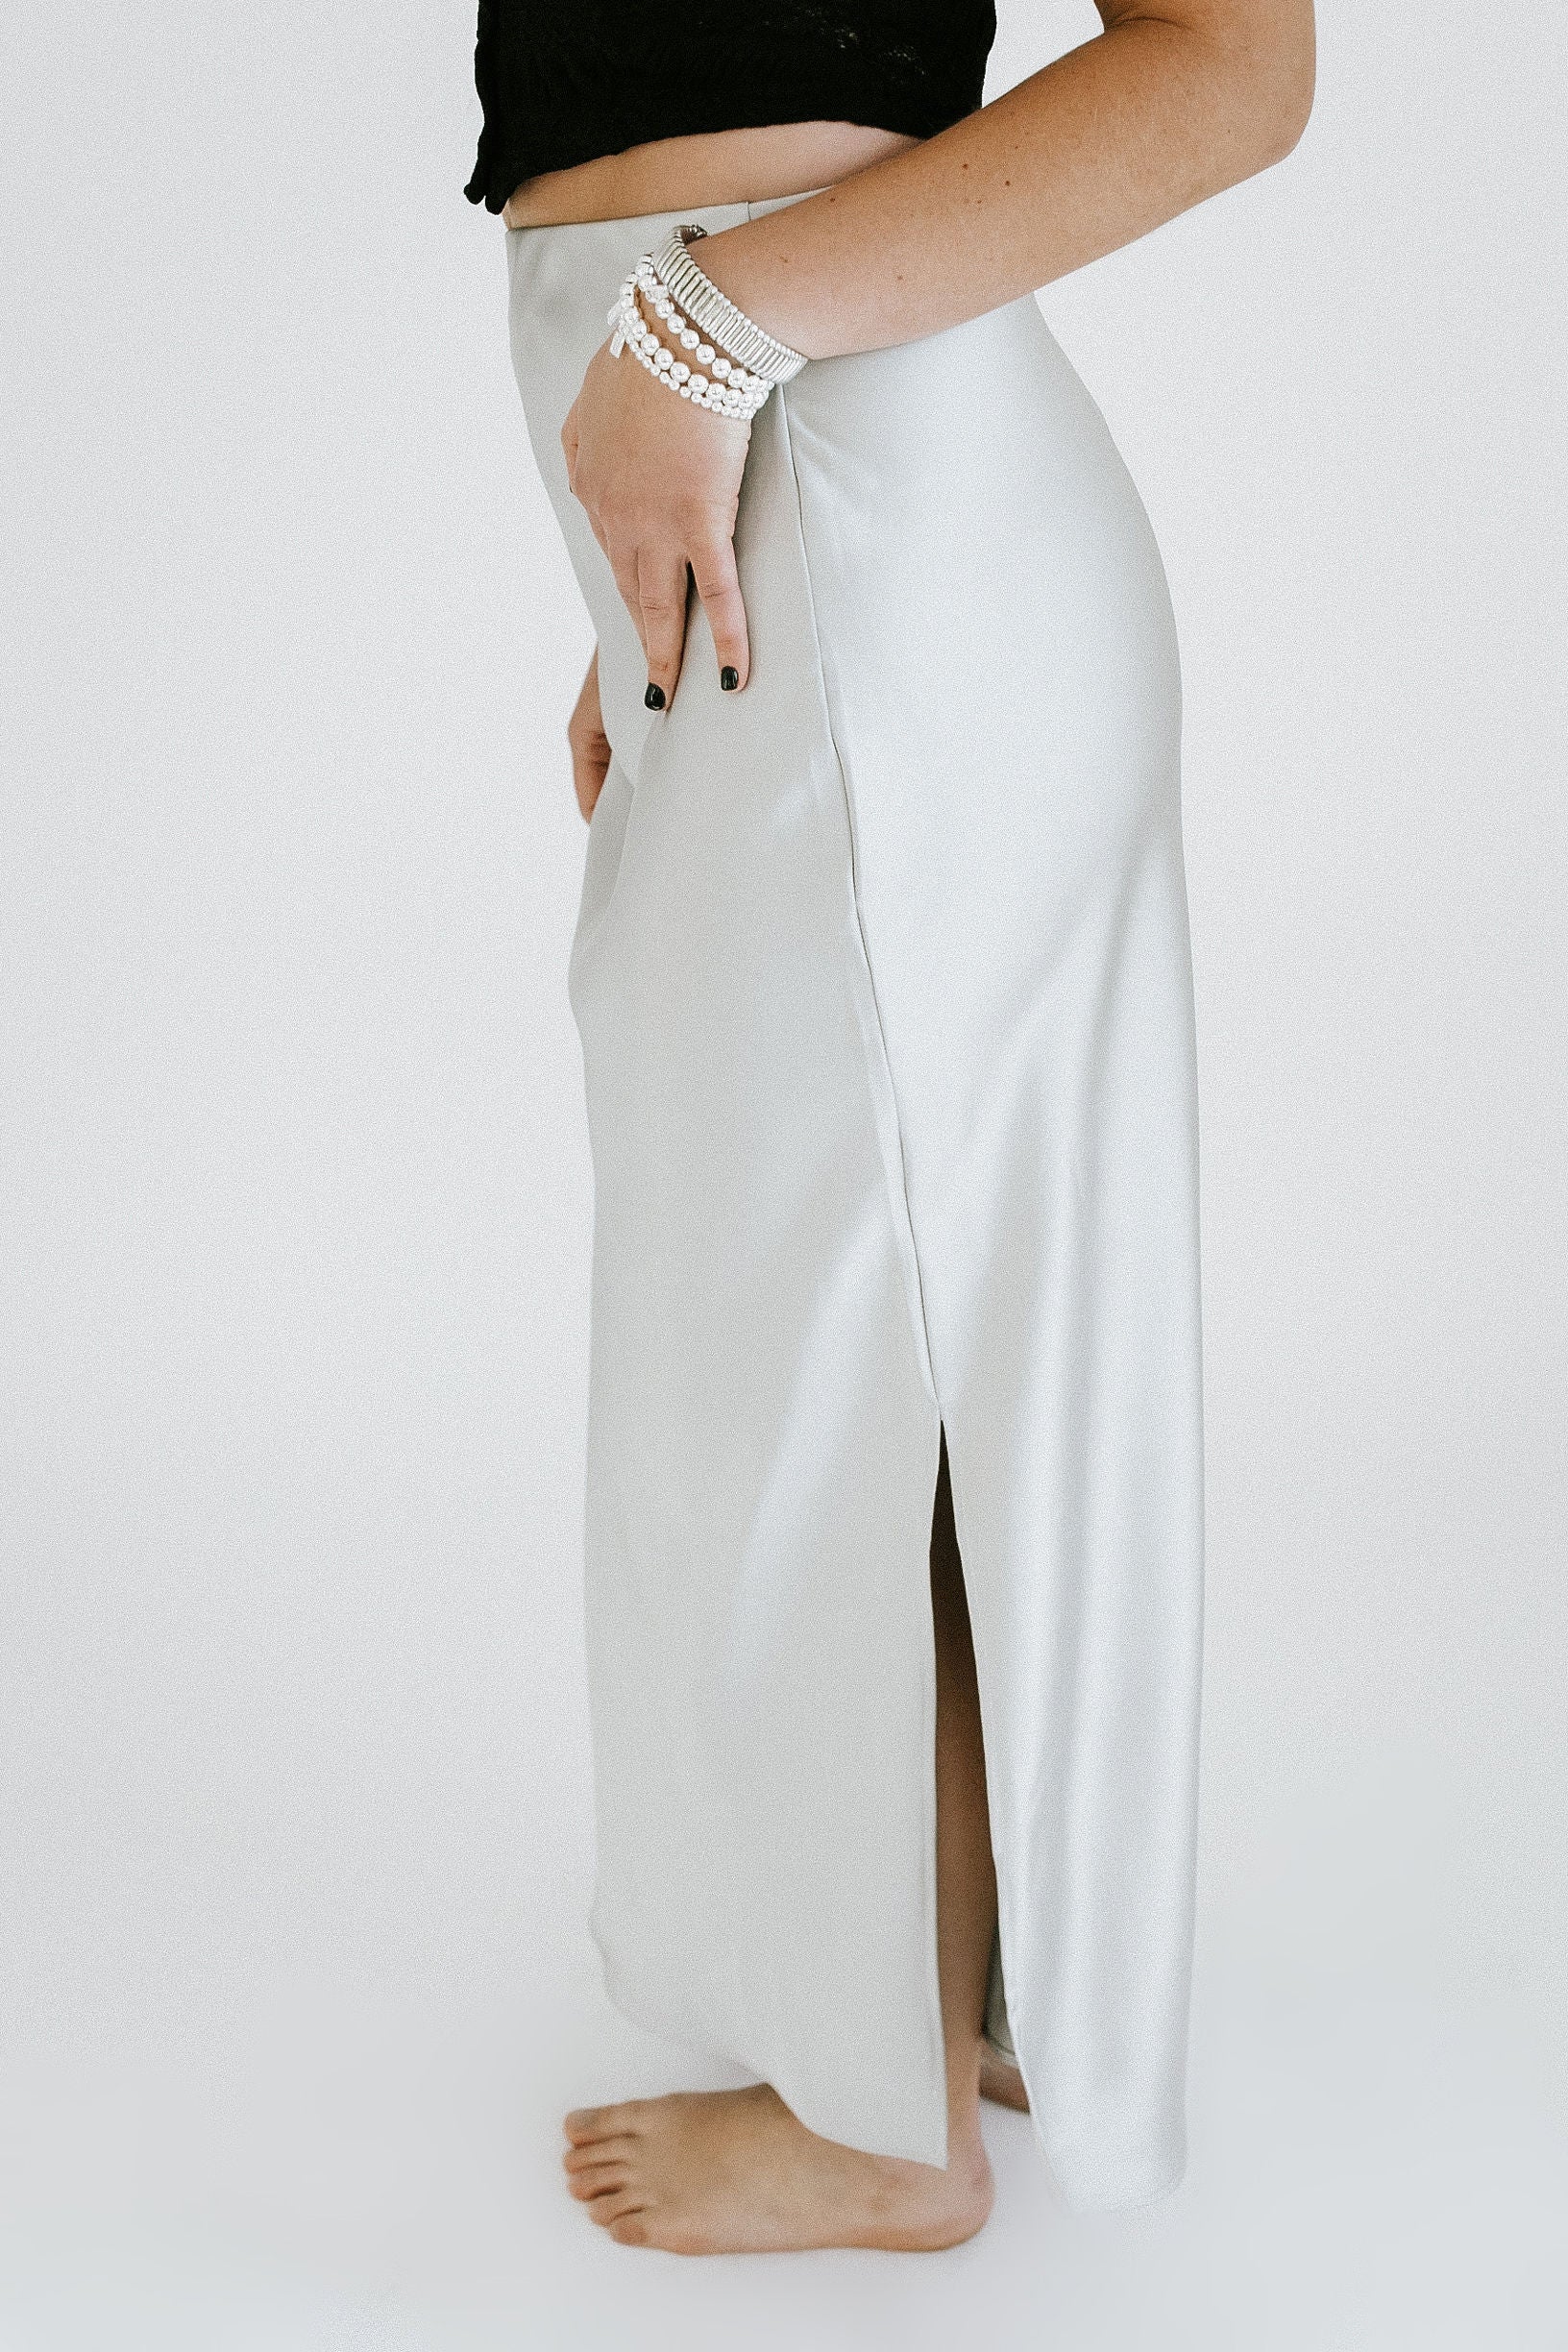 Illuminate Satin Slit Maxi Skirt - Silver - THELIFESTYLEDCO Shop